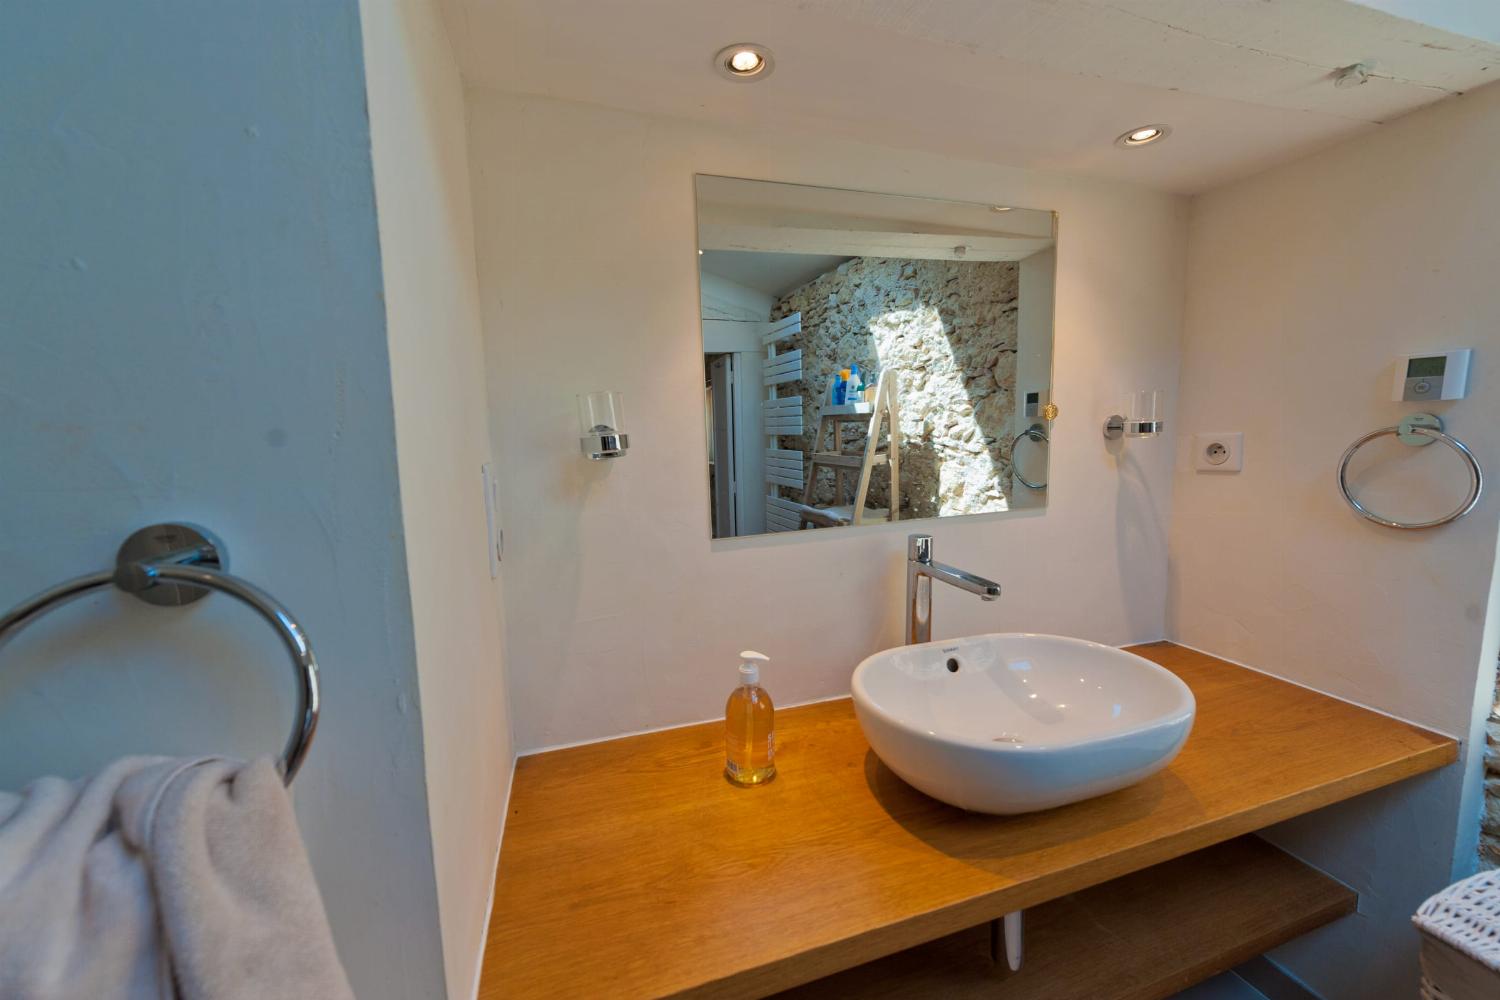 Bathroom | Rental home in the Tarn